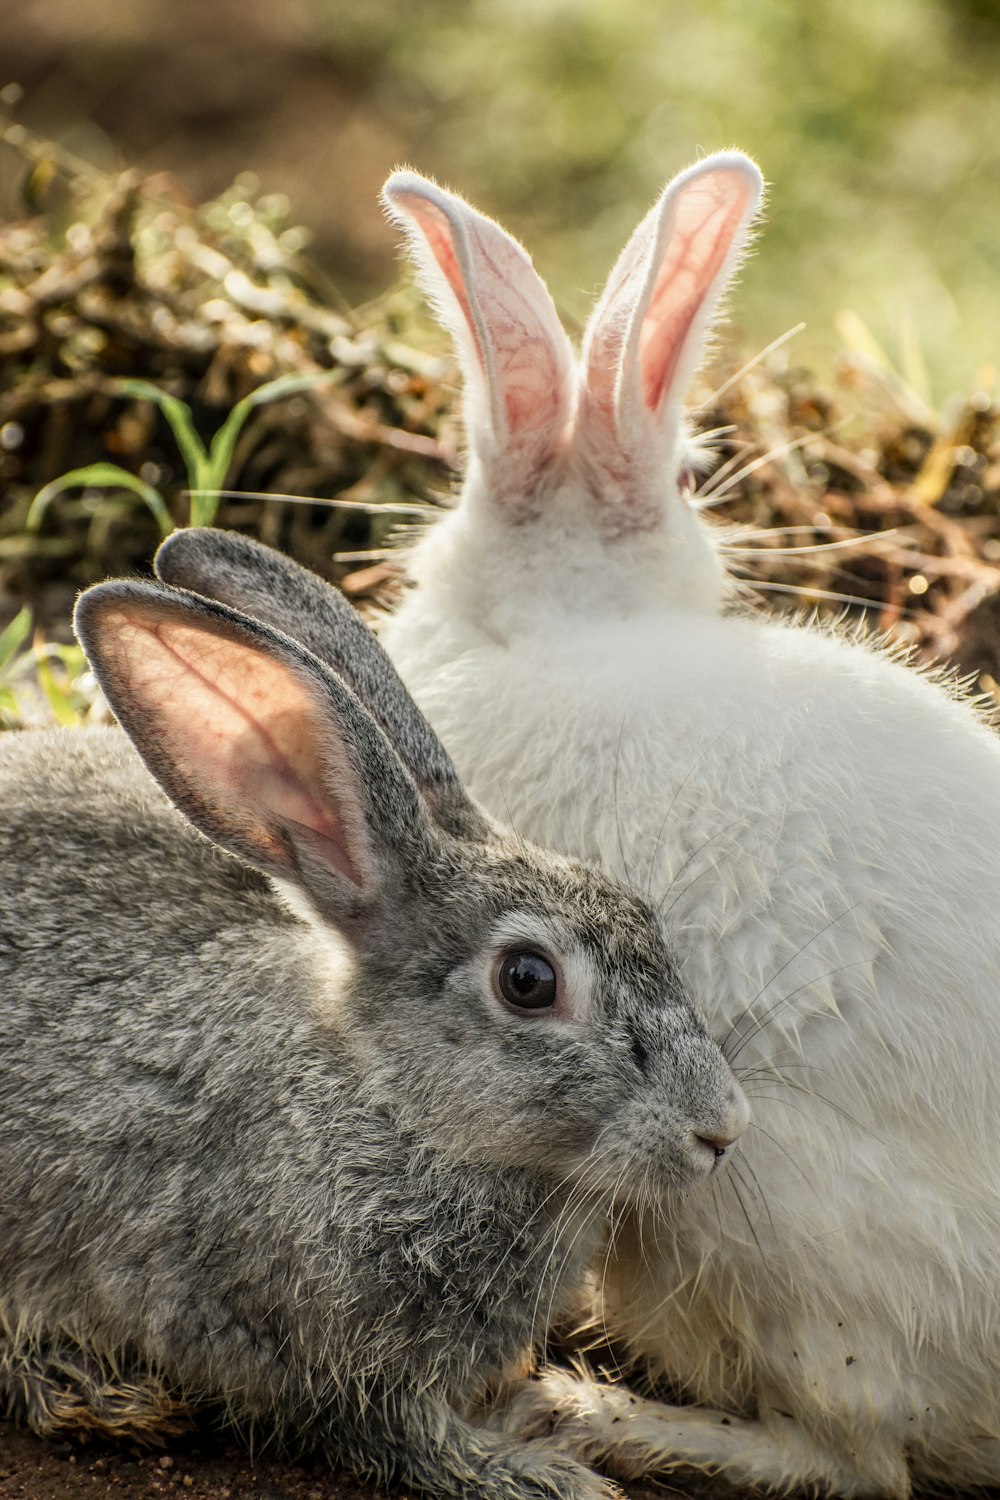 a white rabbit sitting next to a gray rabbit